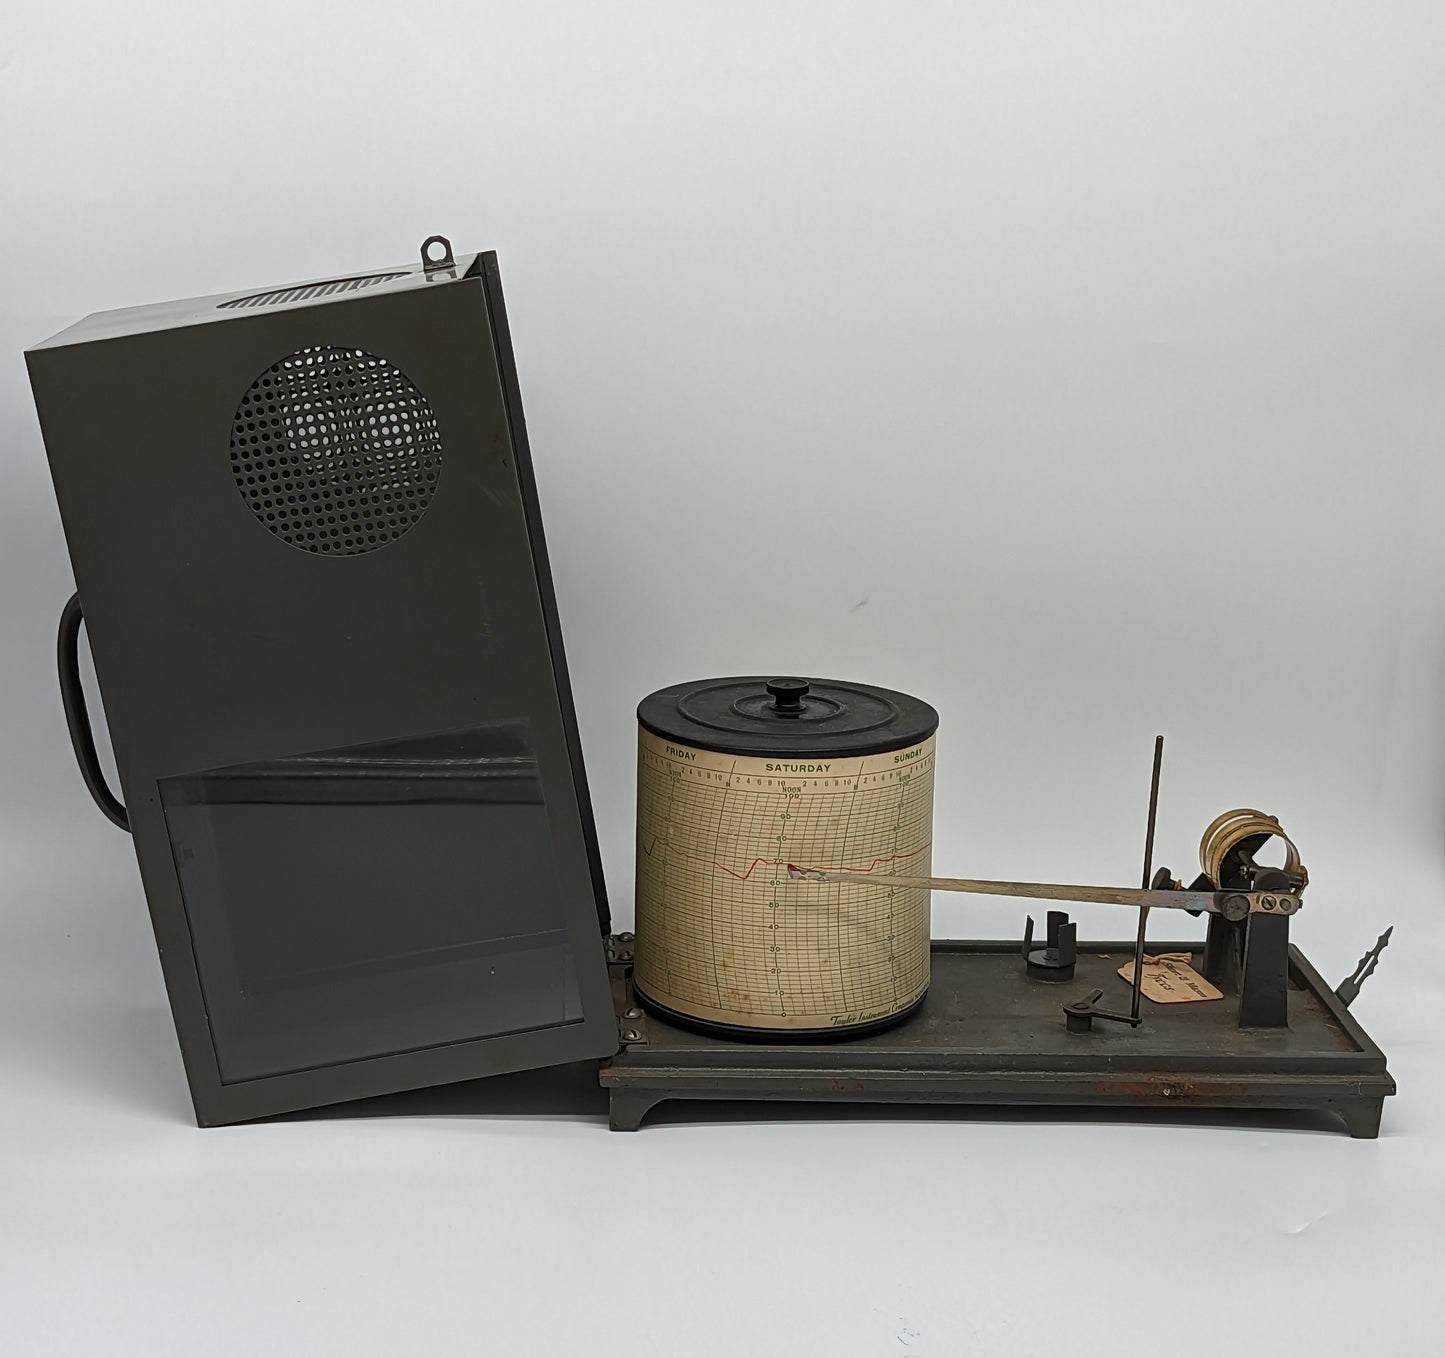 Test Equipment & Meters (1948-1980)